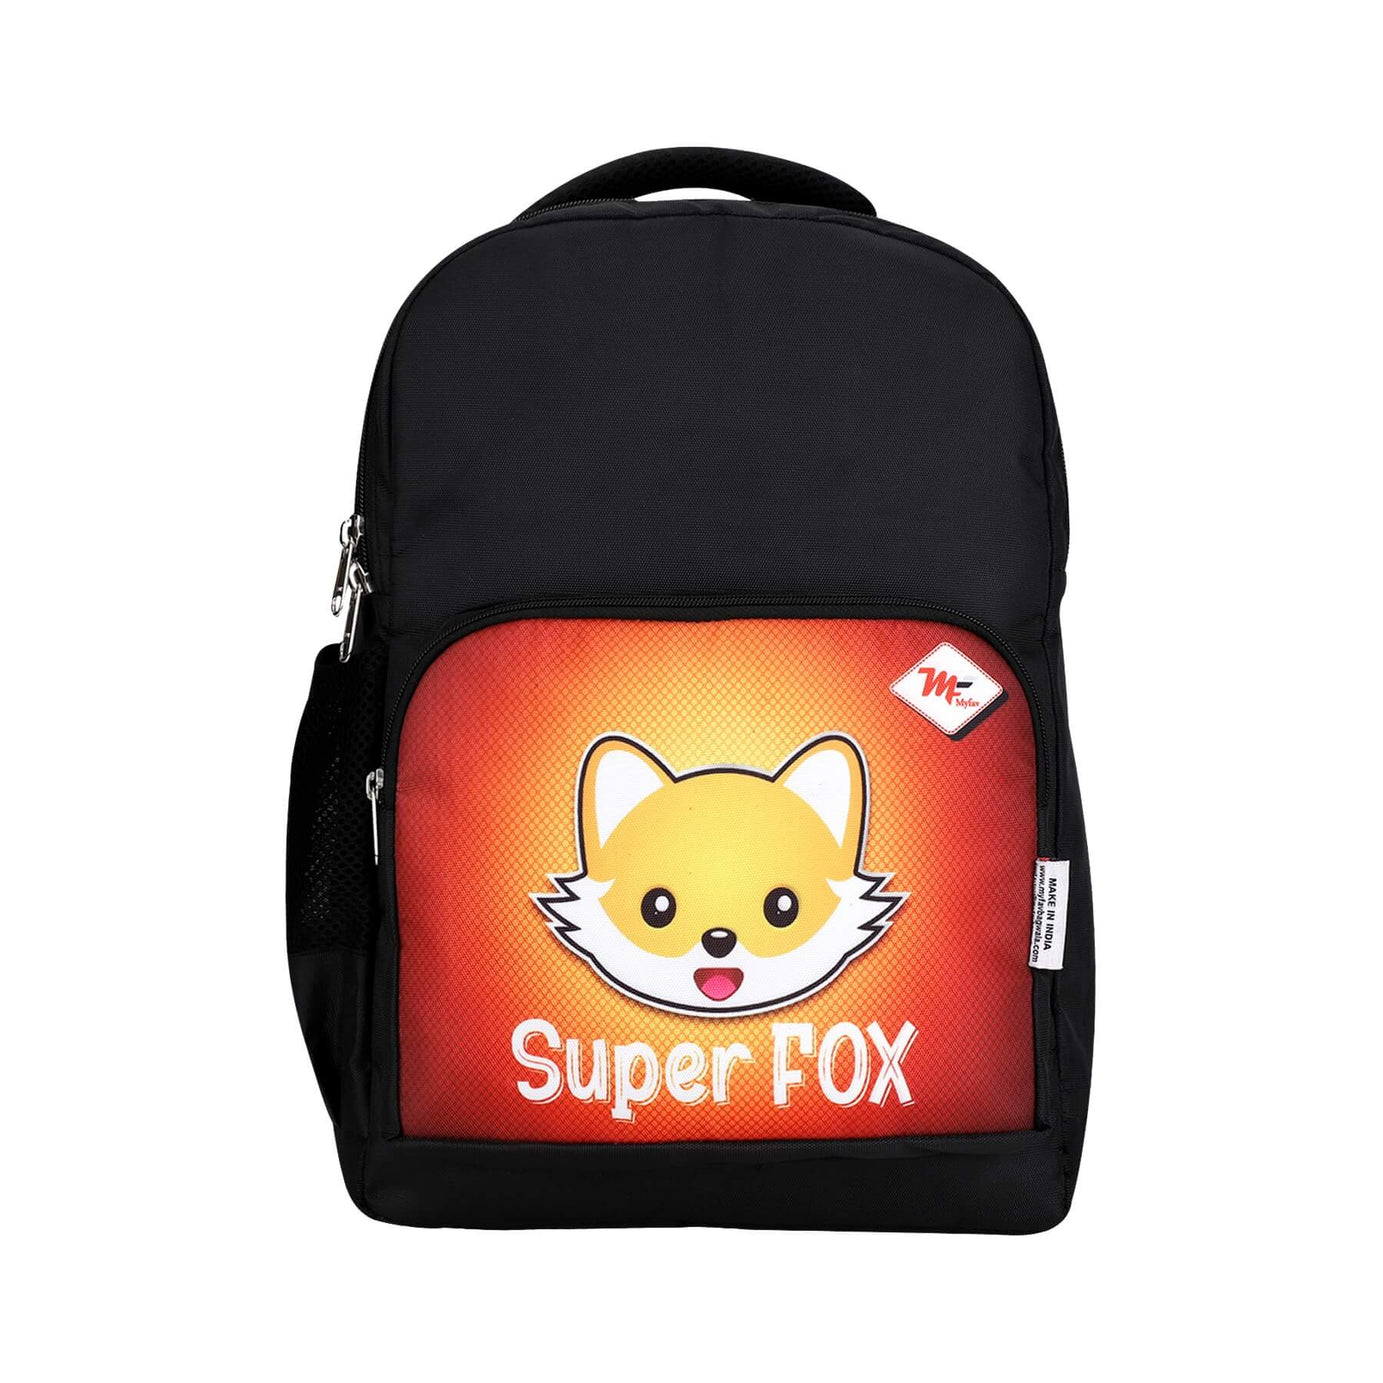 My Fav Super Fox Kids School Bag For Girls/Boys, School, Casual, Picnic, Nursery-(2 to 10 year Old Kid)